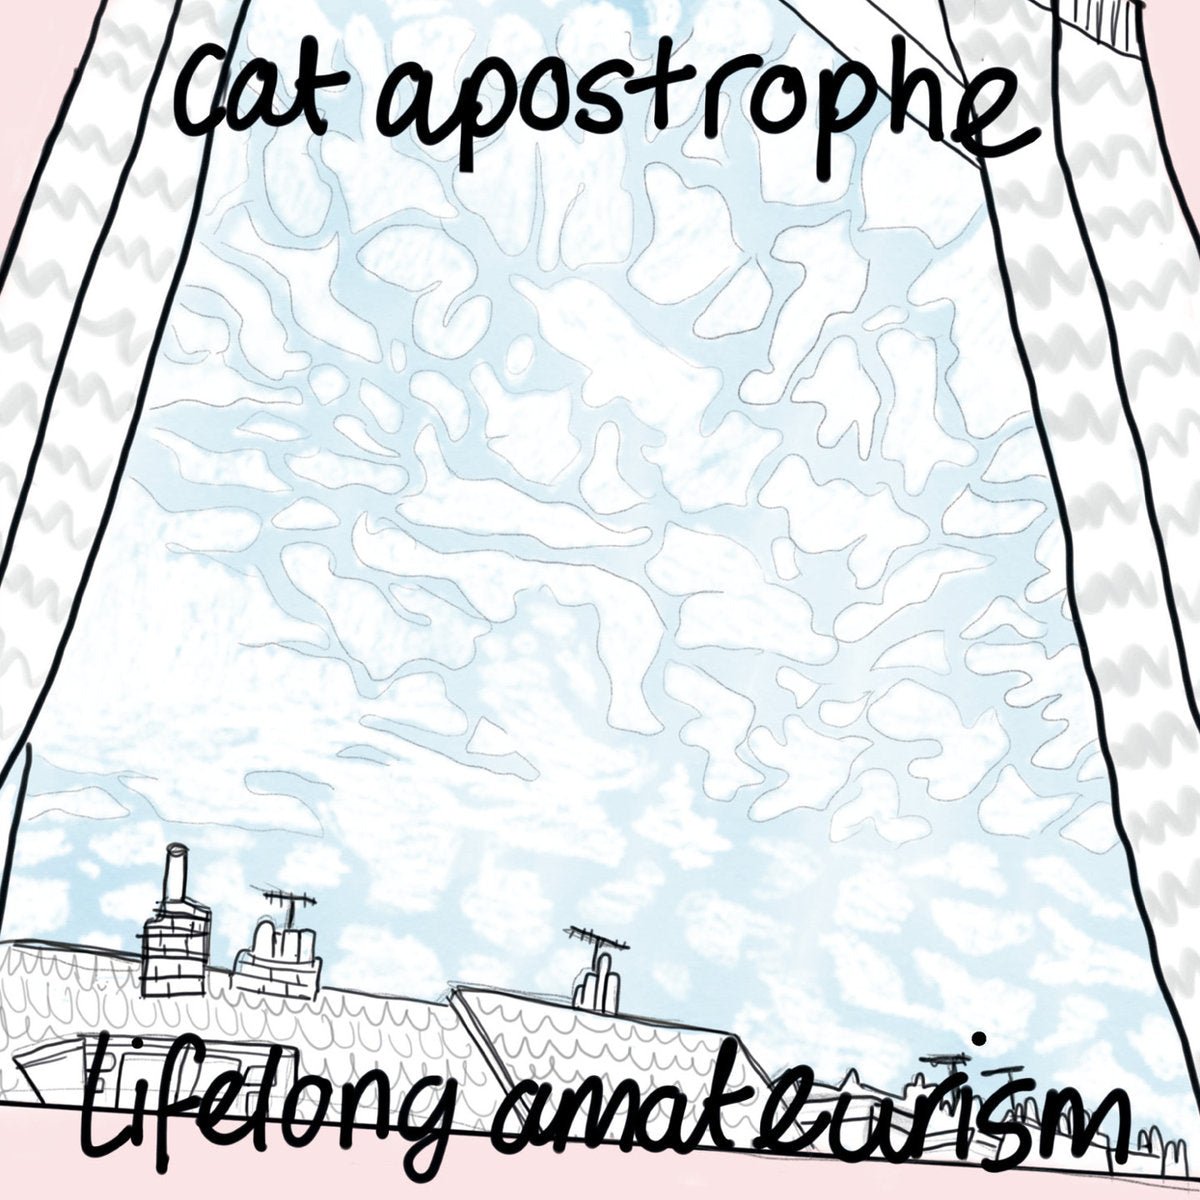 Cat Apostrophe - Lifelong Amateurism LP - Vinyl - Everything Sucks